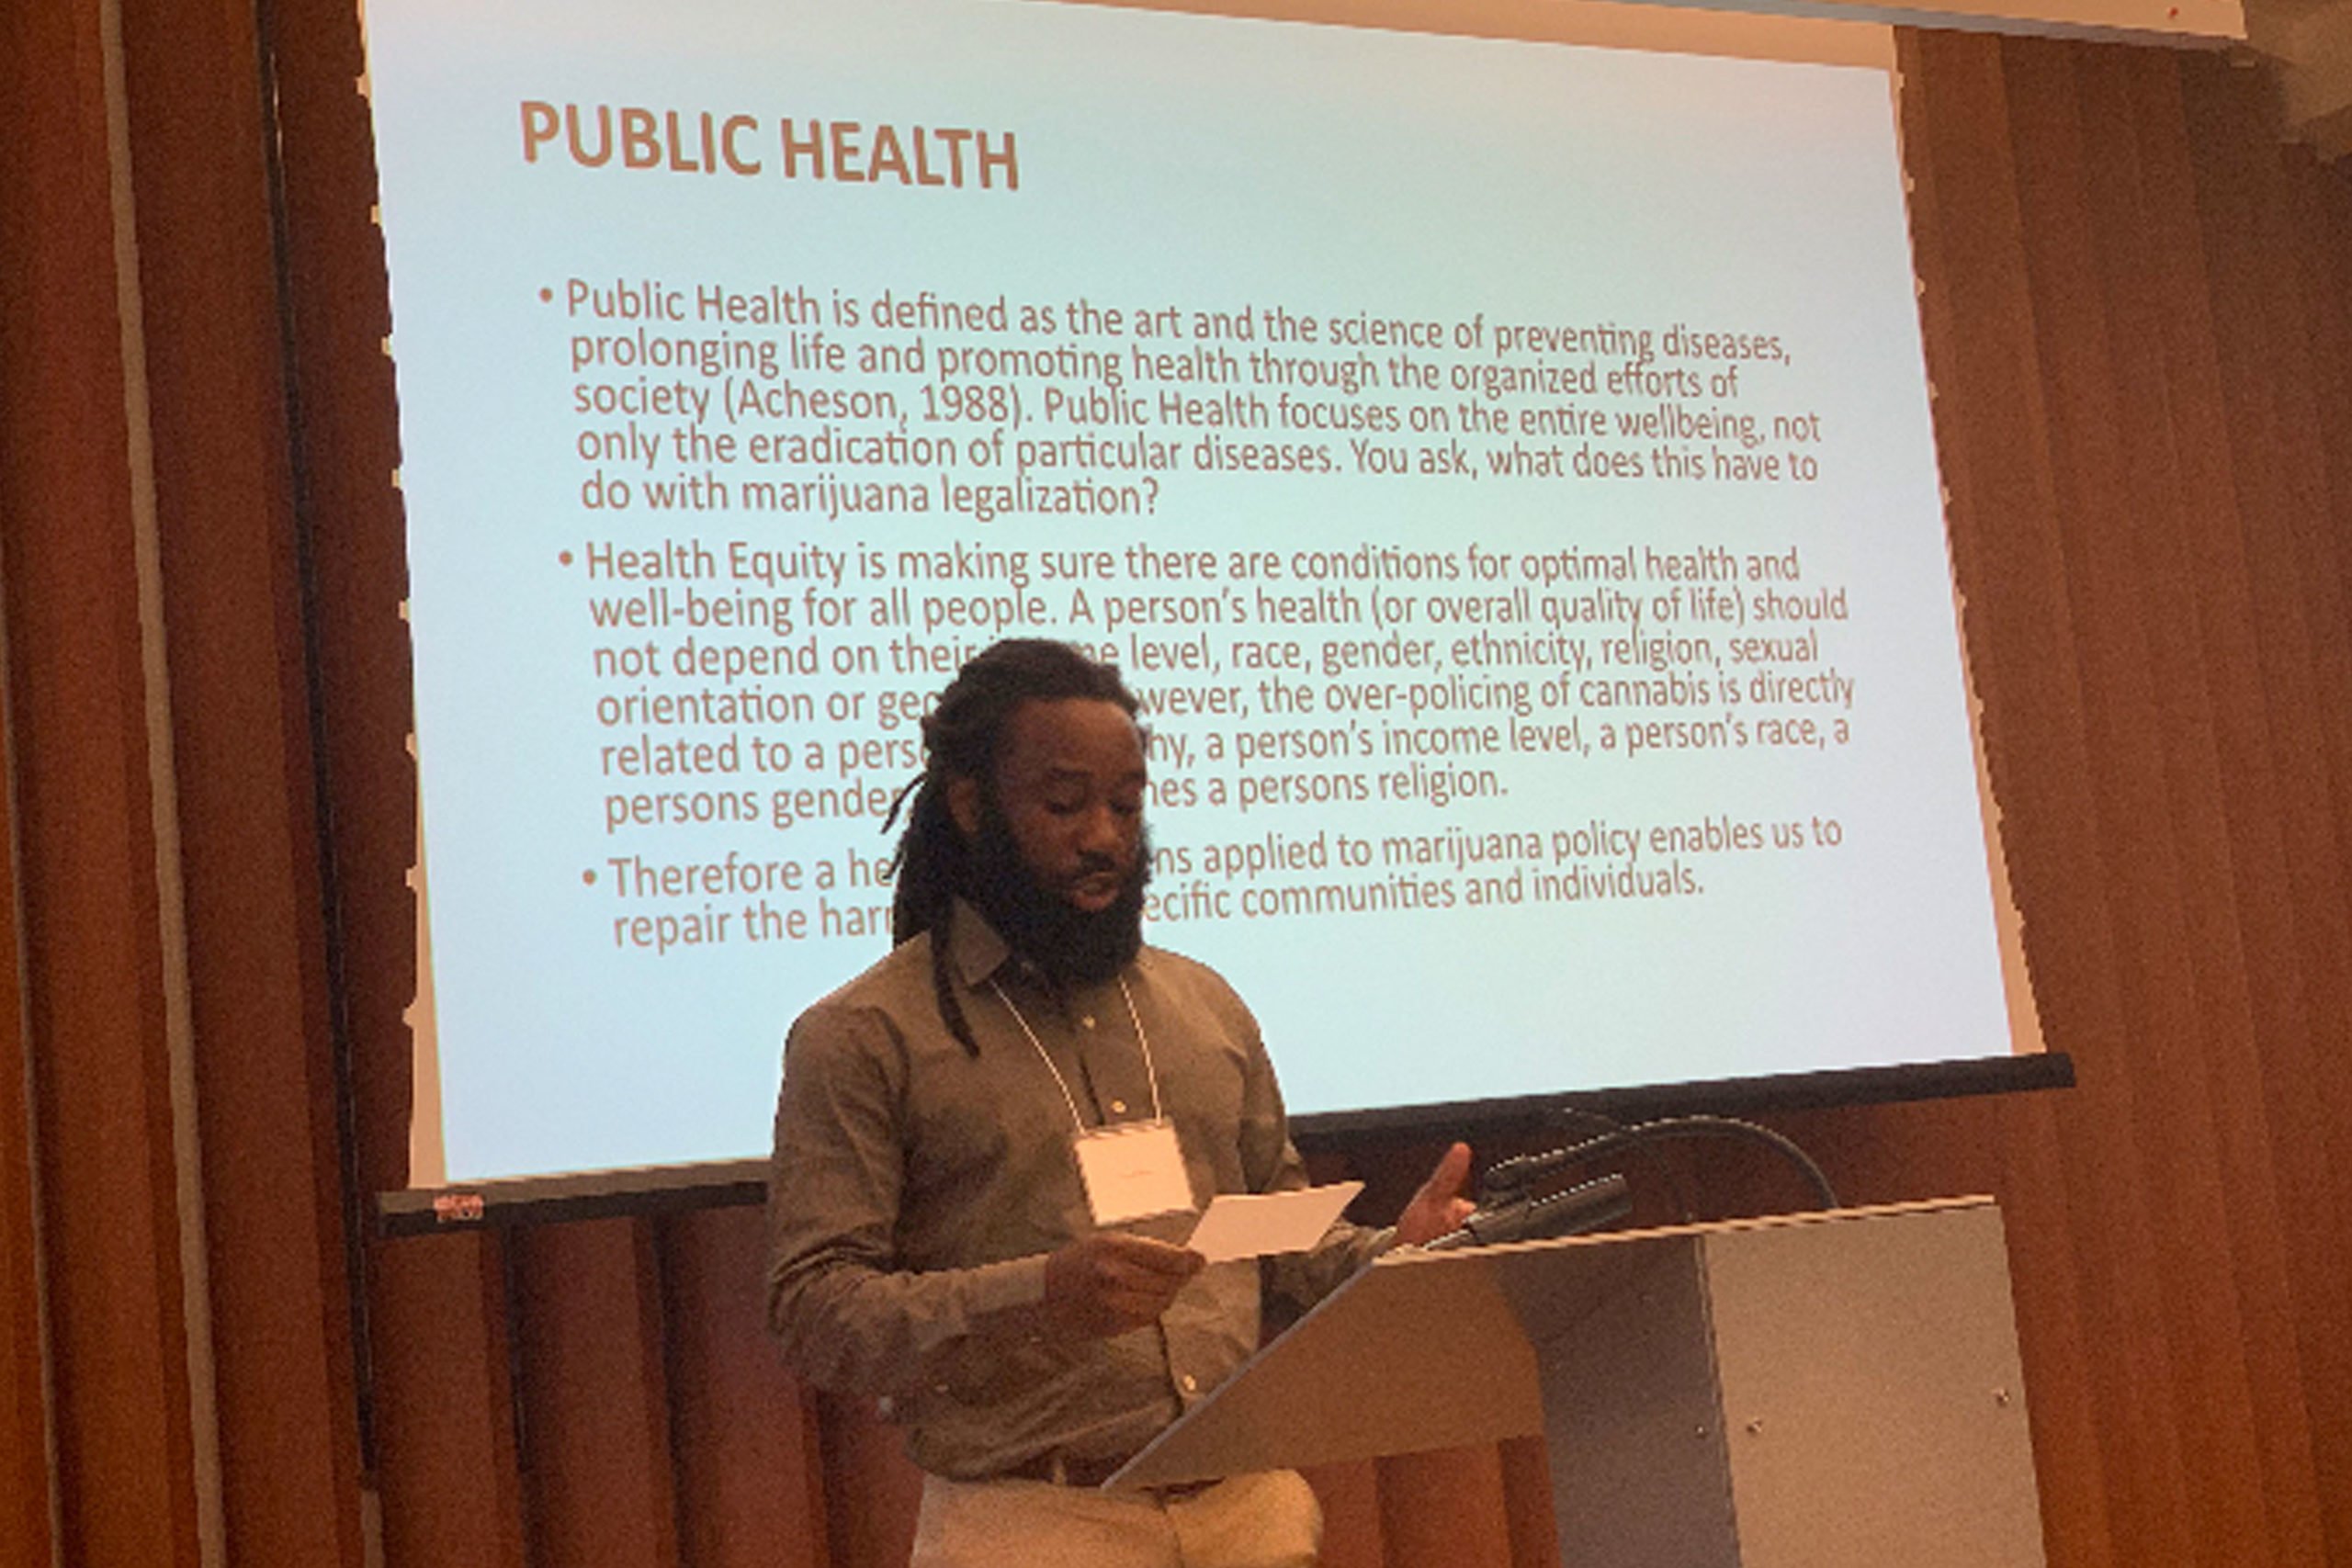 Public Health Fellow presenting research